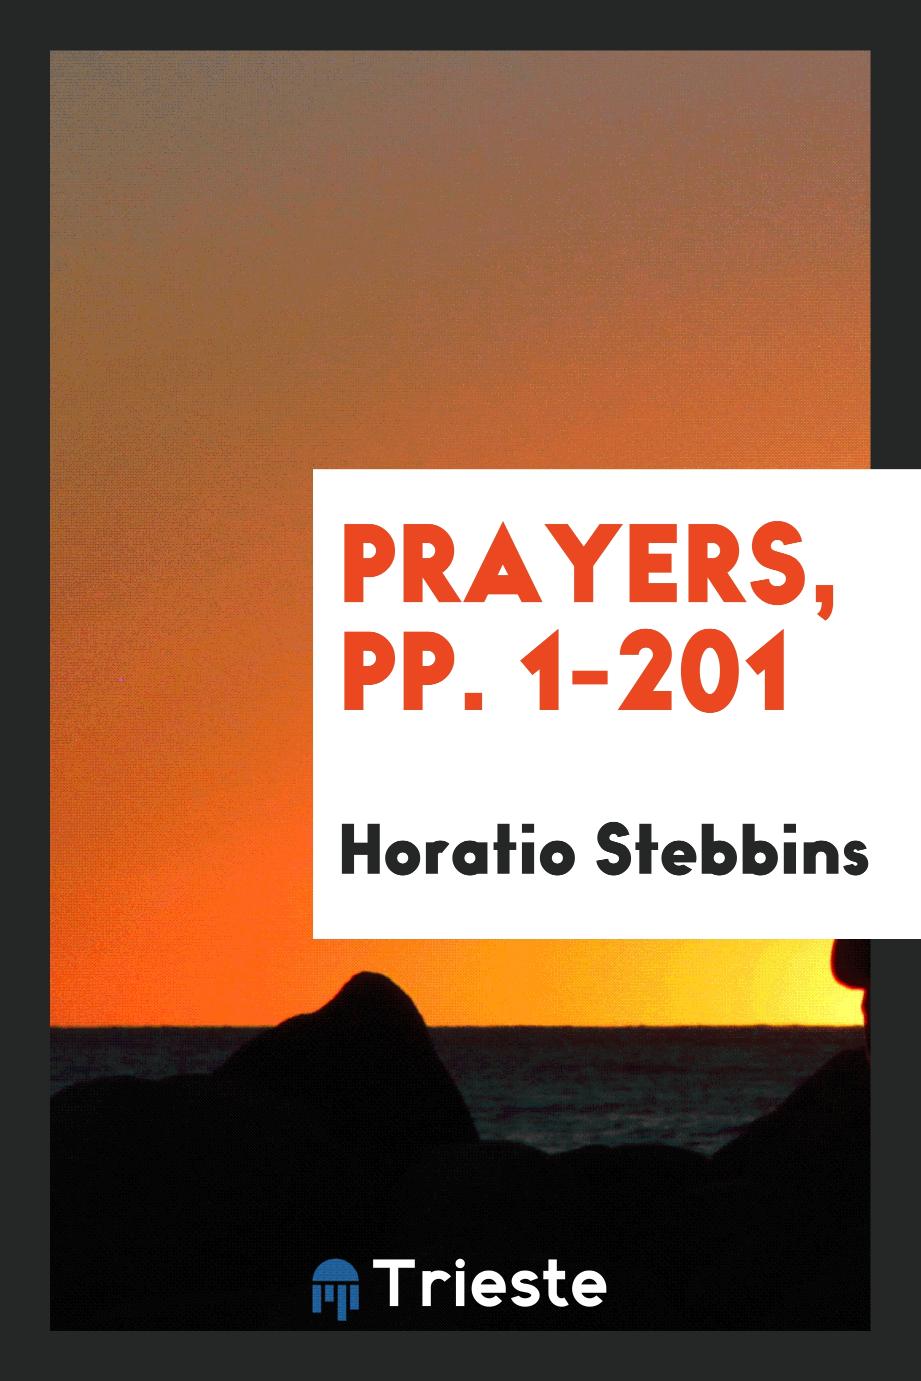 Prayers, pp. 1-201